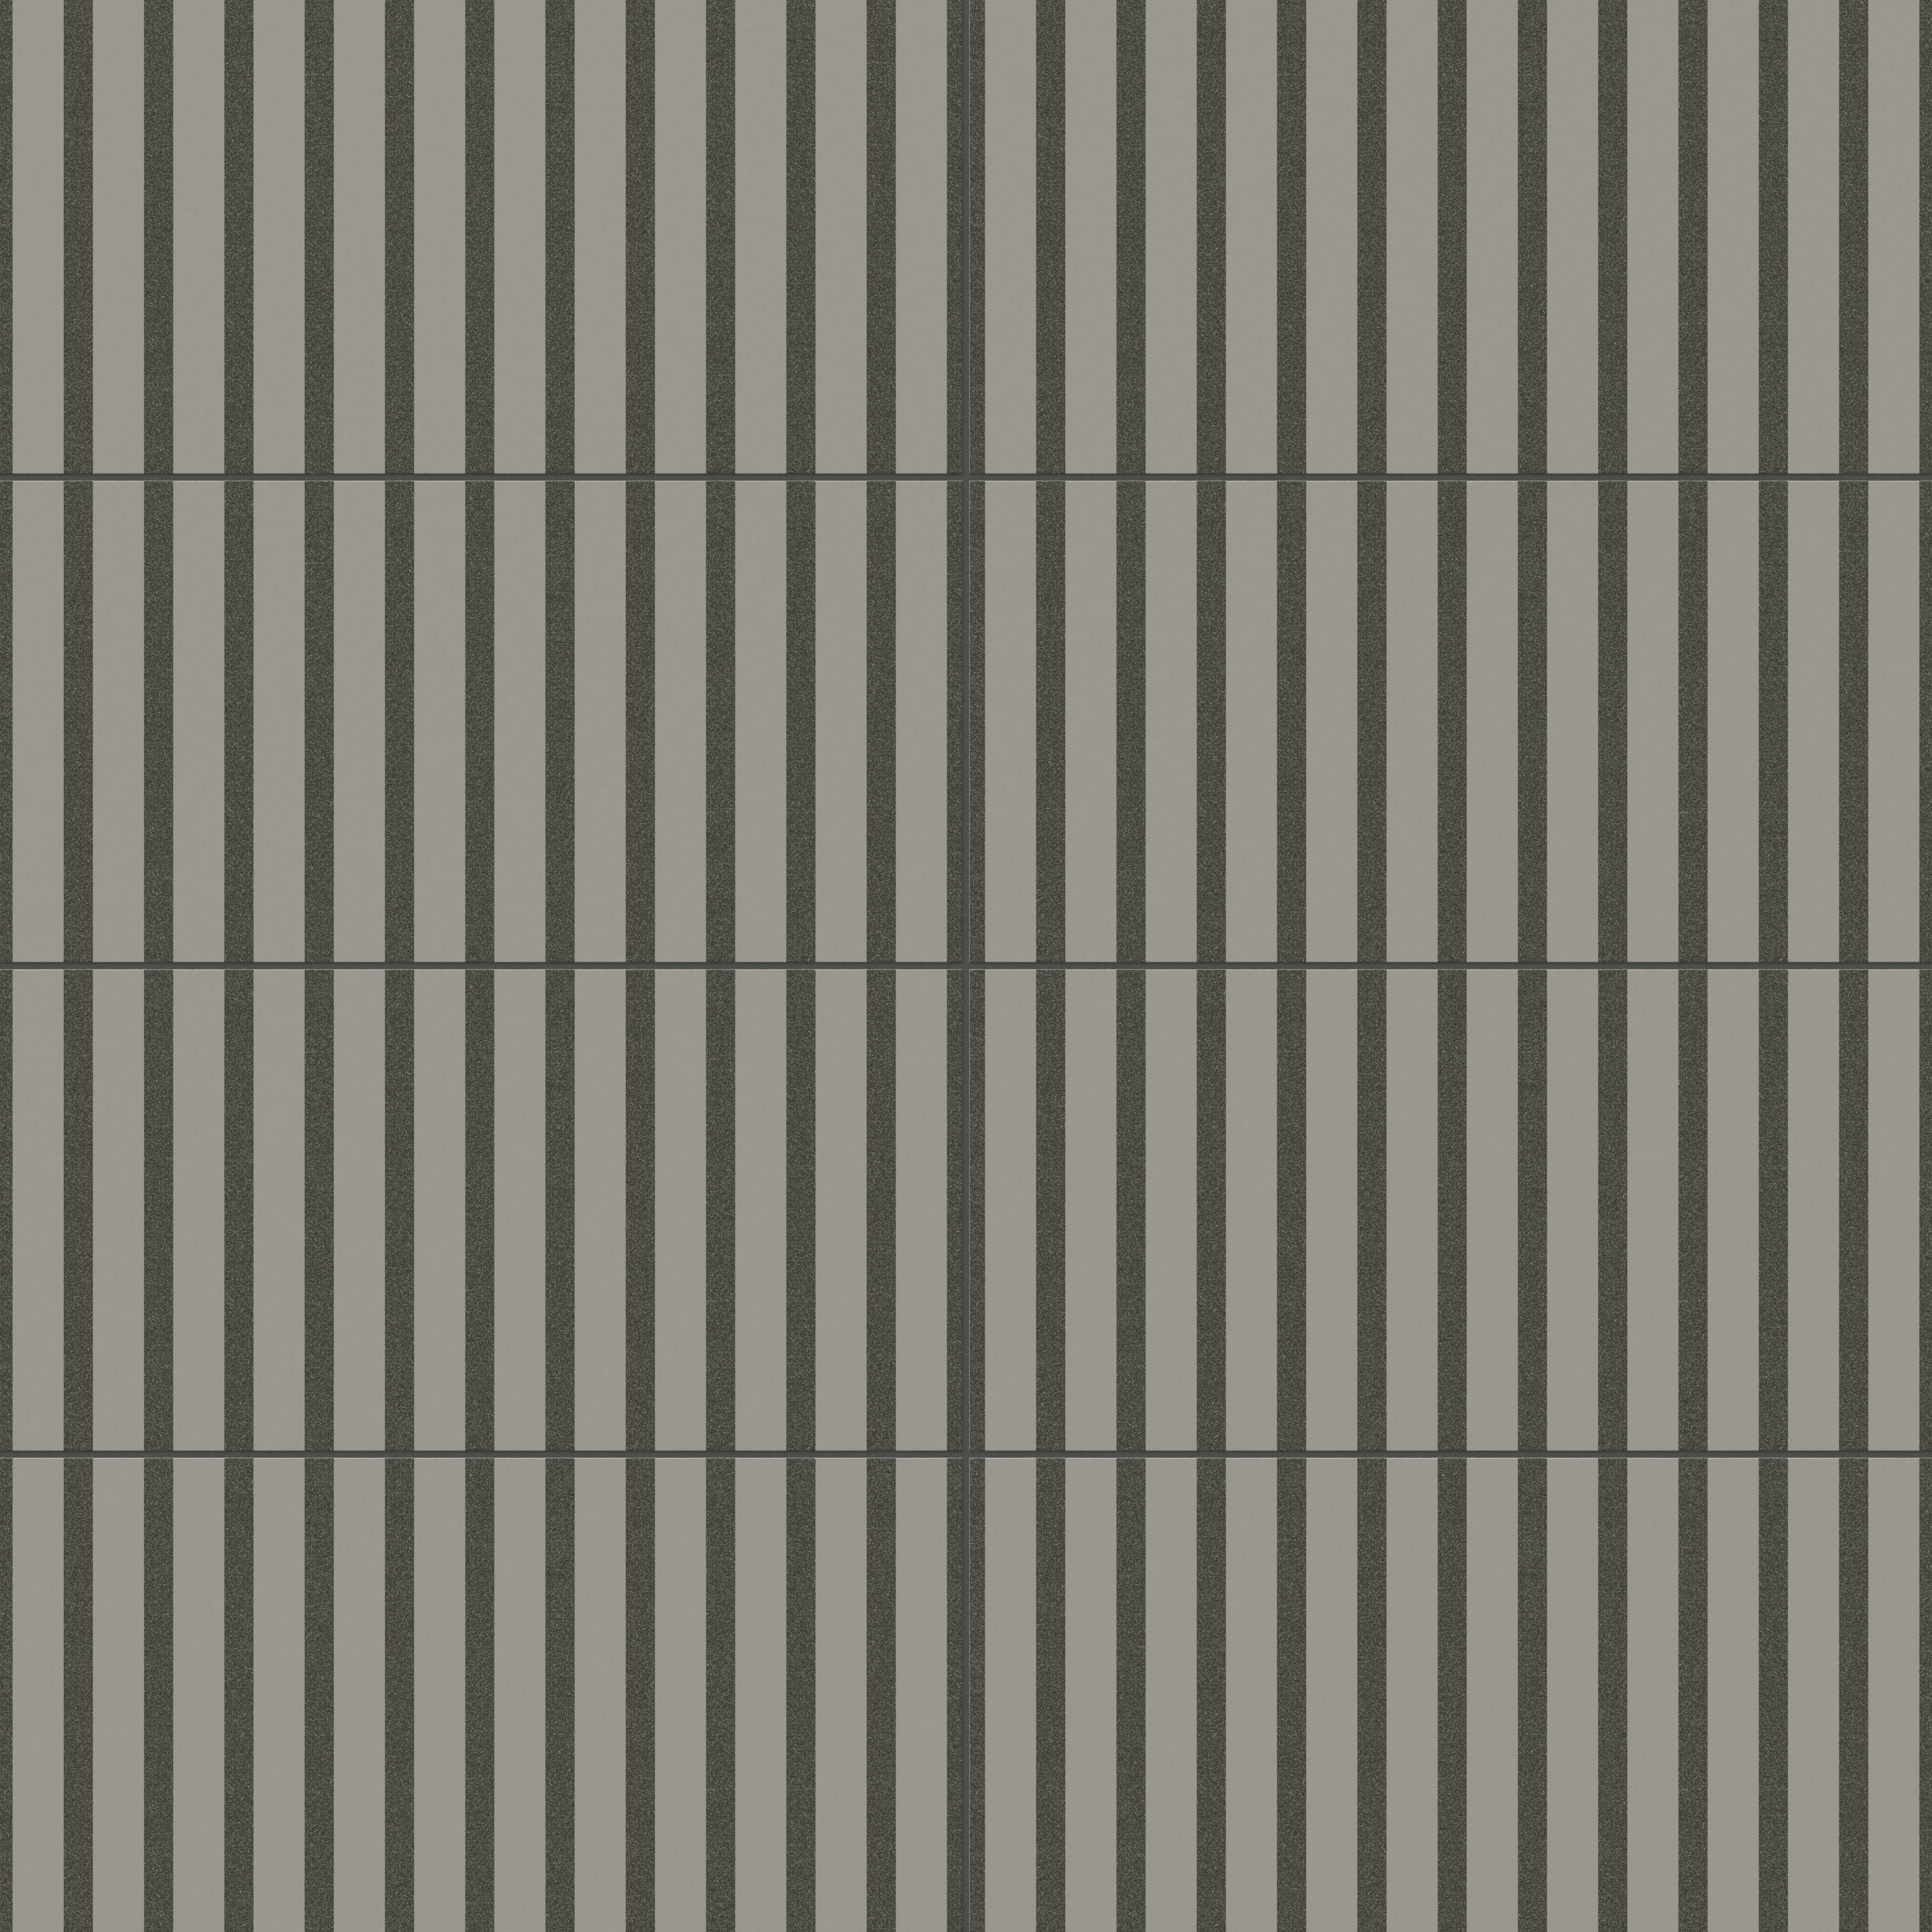 Riley 12x24 Matte Porcelain Tile in Striped Pattern Charcoal